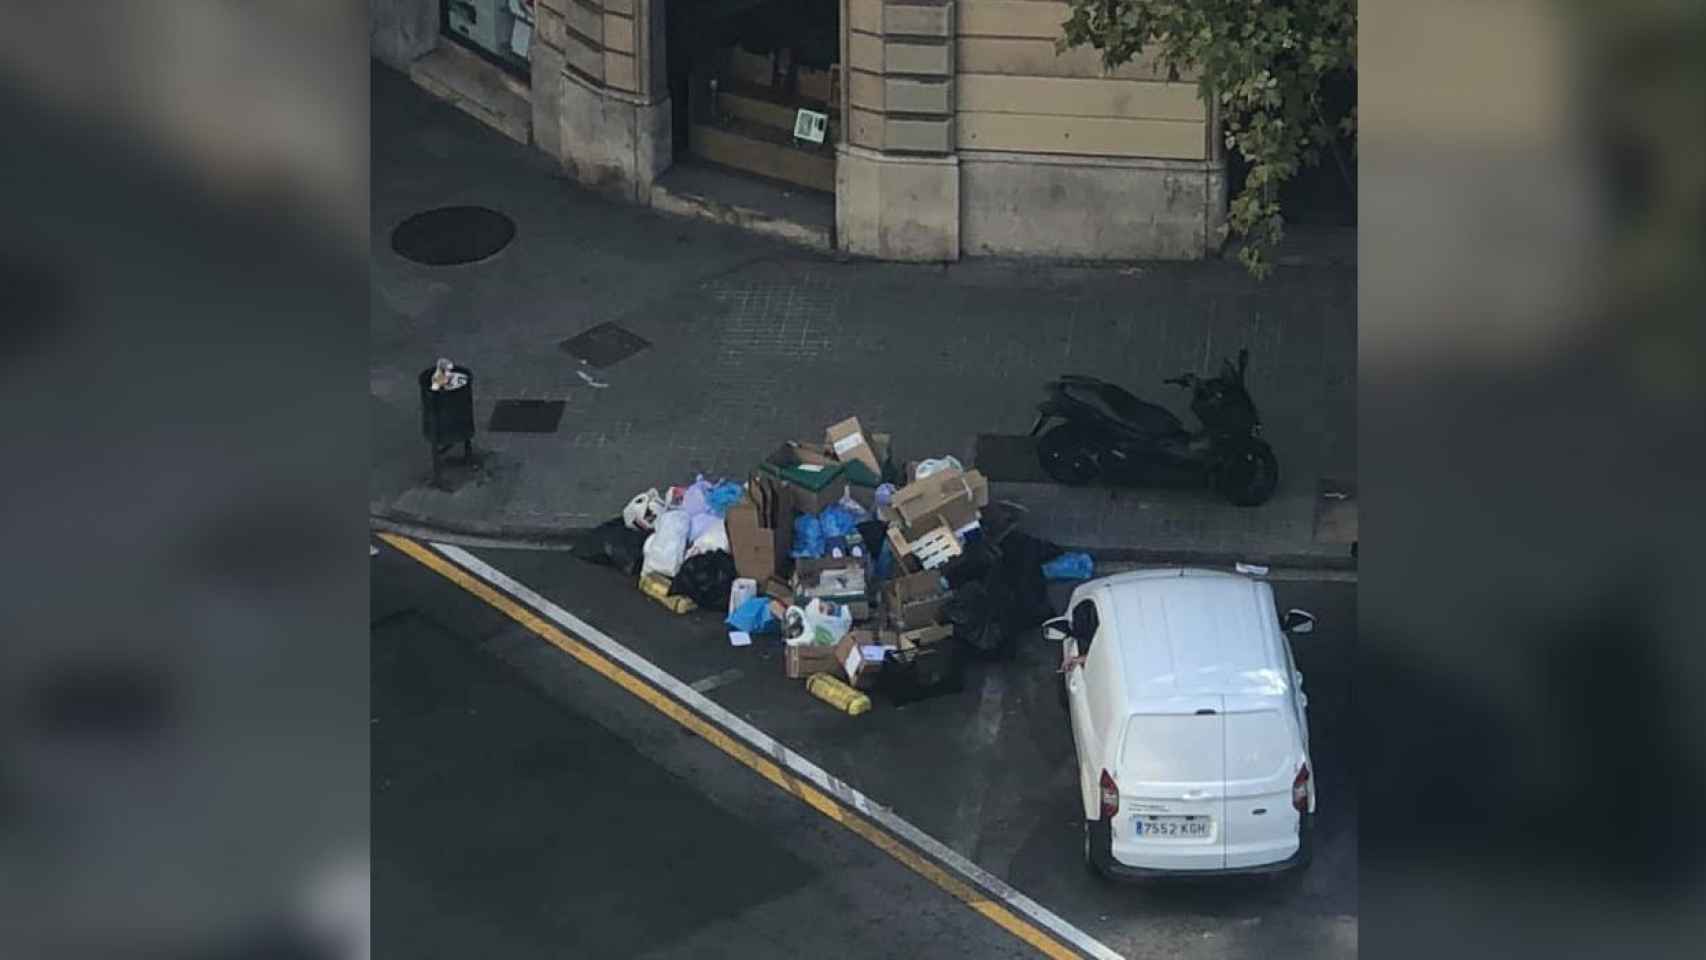 Montaña de bolsas de basura en L'Eixample tras la retirada de contenedores / ON VAS BARCELONA - TWITTER